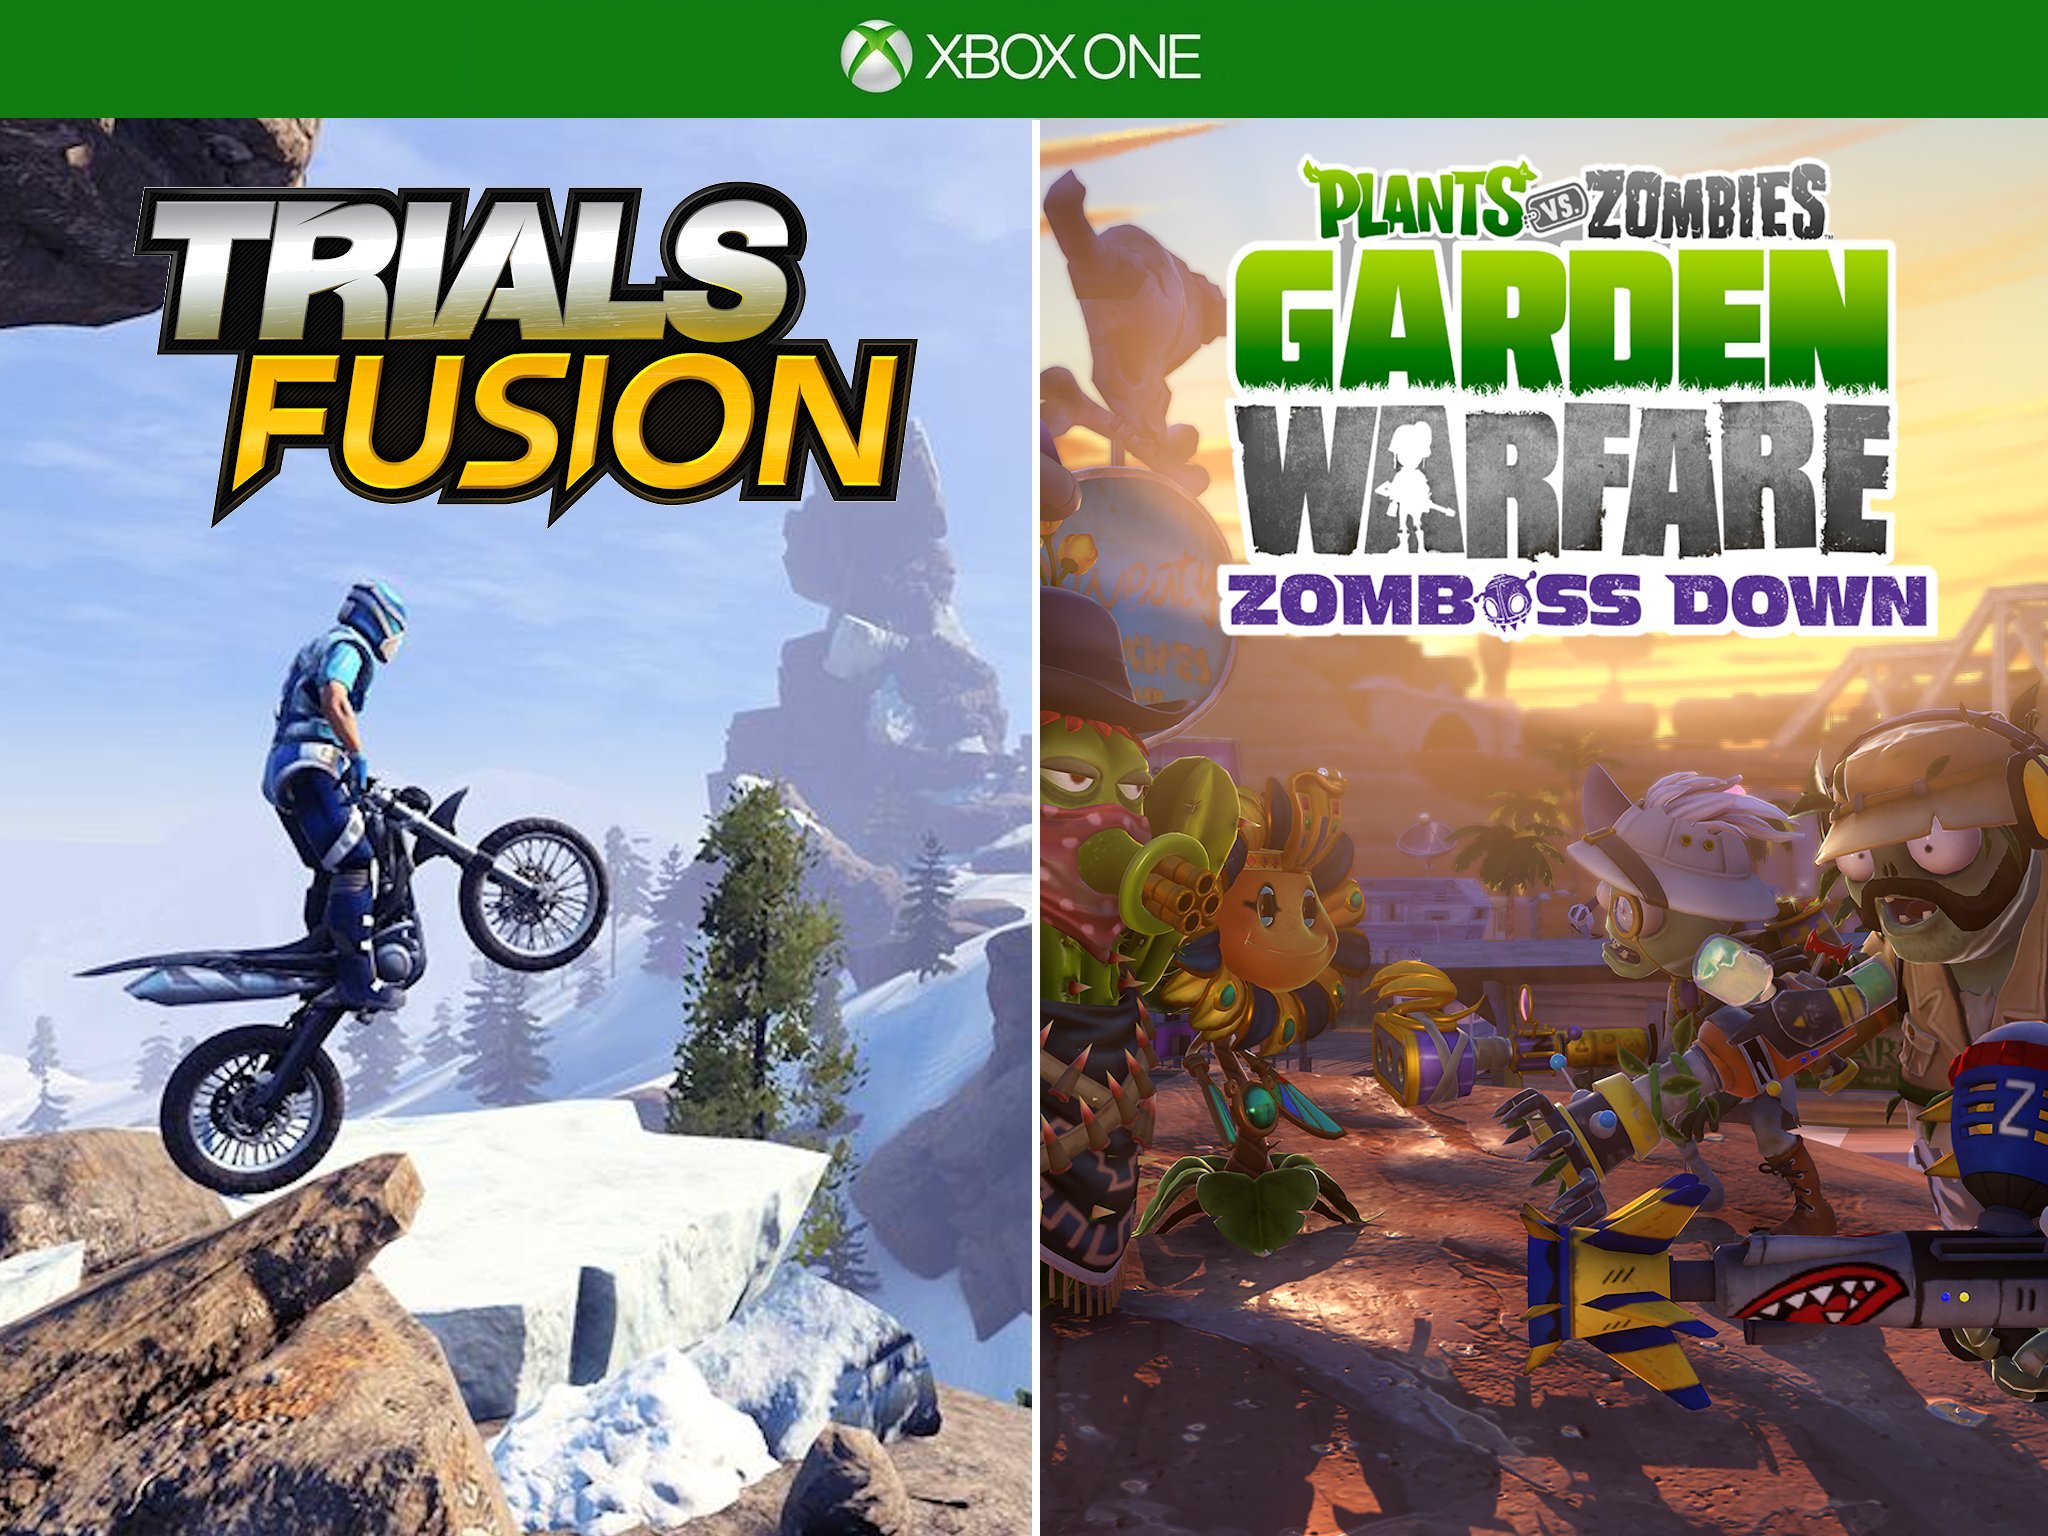 Get Plants vs. Zombies Garden Warfare 'Zomboss Down' DLC For Free